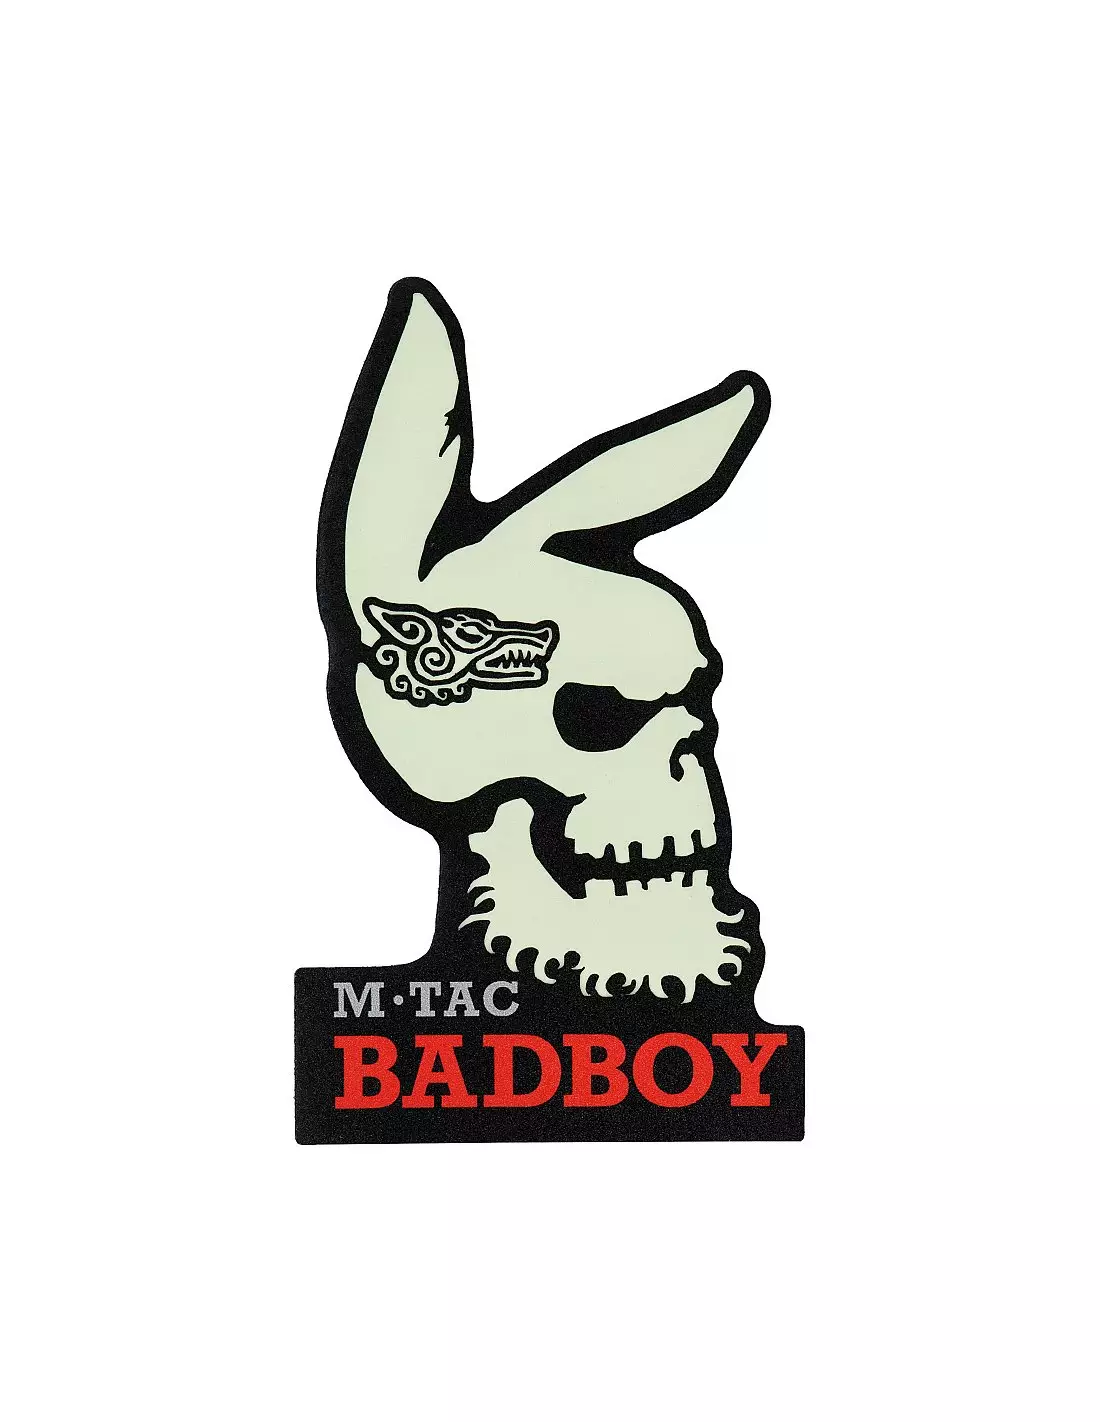 Share 87 about danish zehen coolest bad boy tattoo super cool   indaotaonec